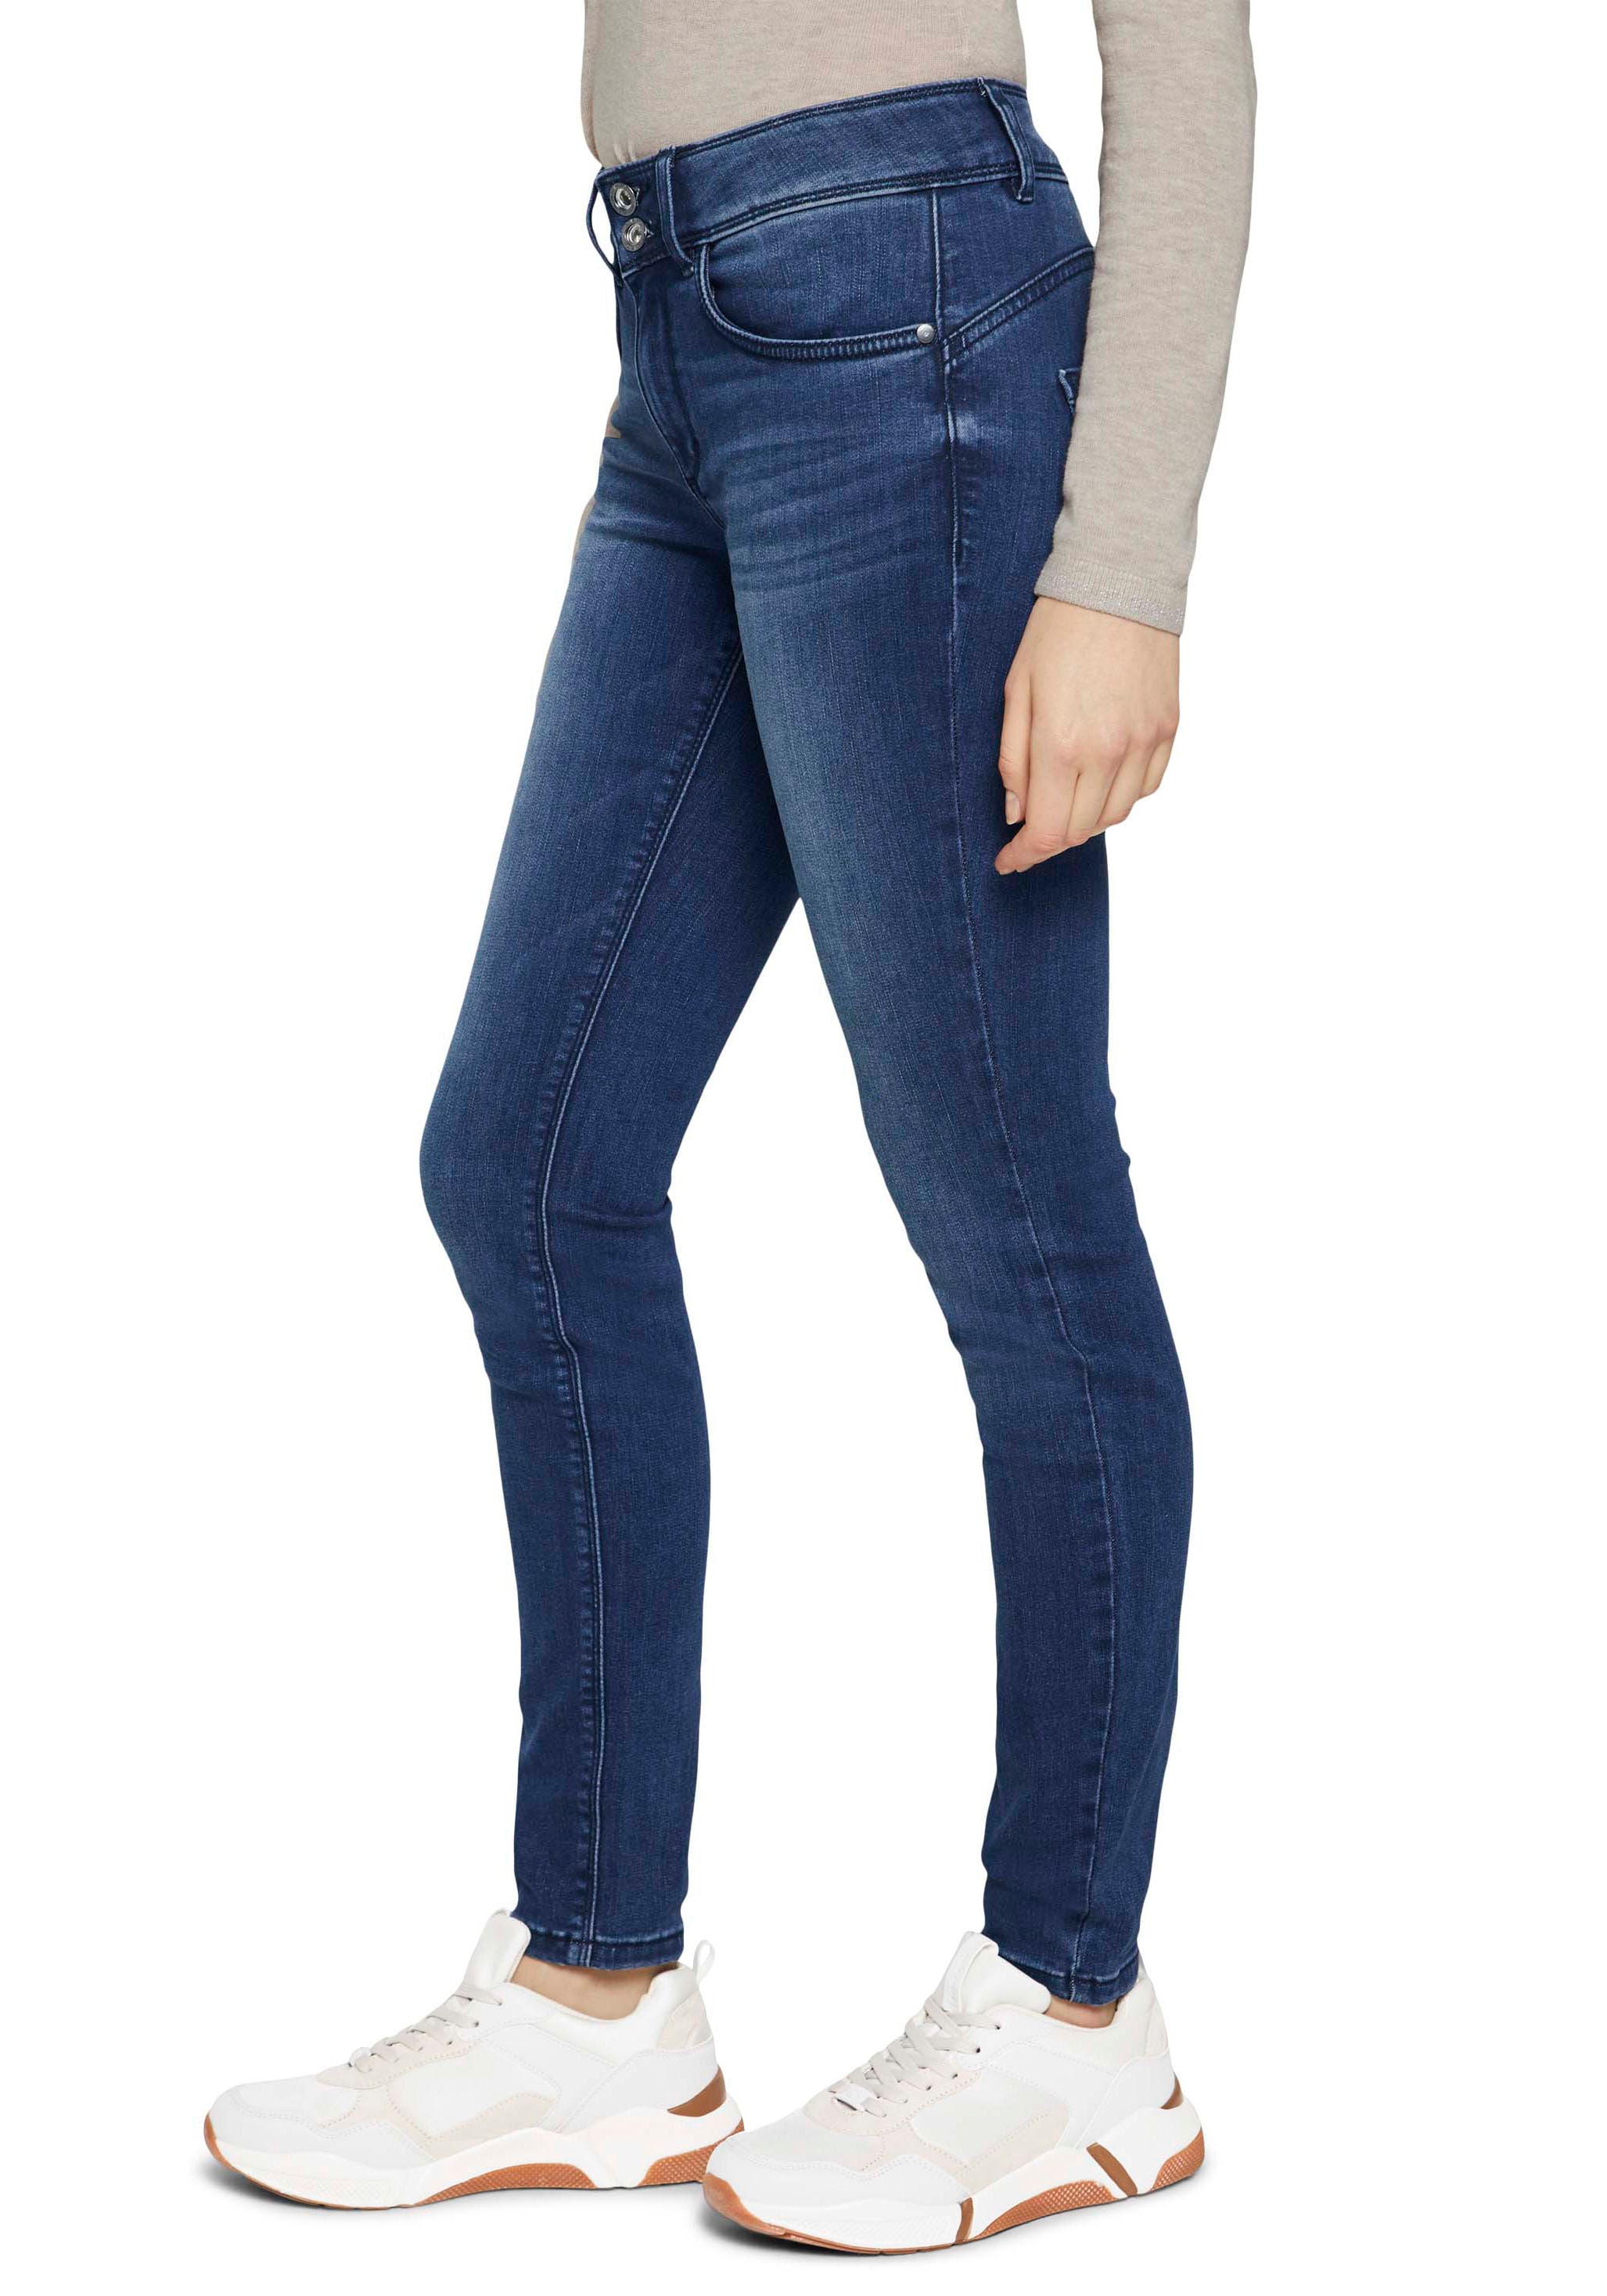 OTTOversand Doppelknopf-Verschluss Skinny-fit-Jeans TAILOR »Alexa Skinny«, TOM mit bei